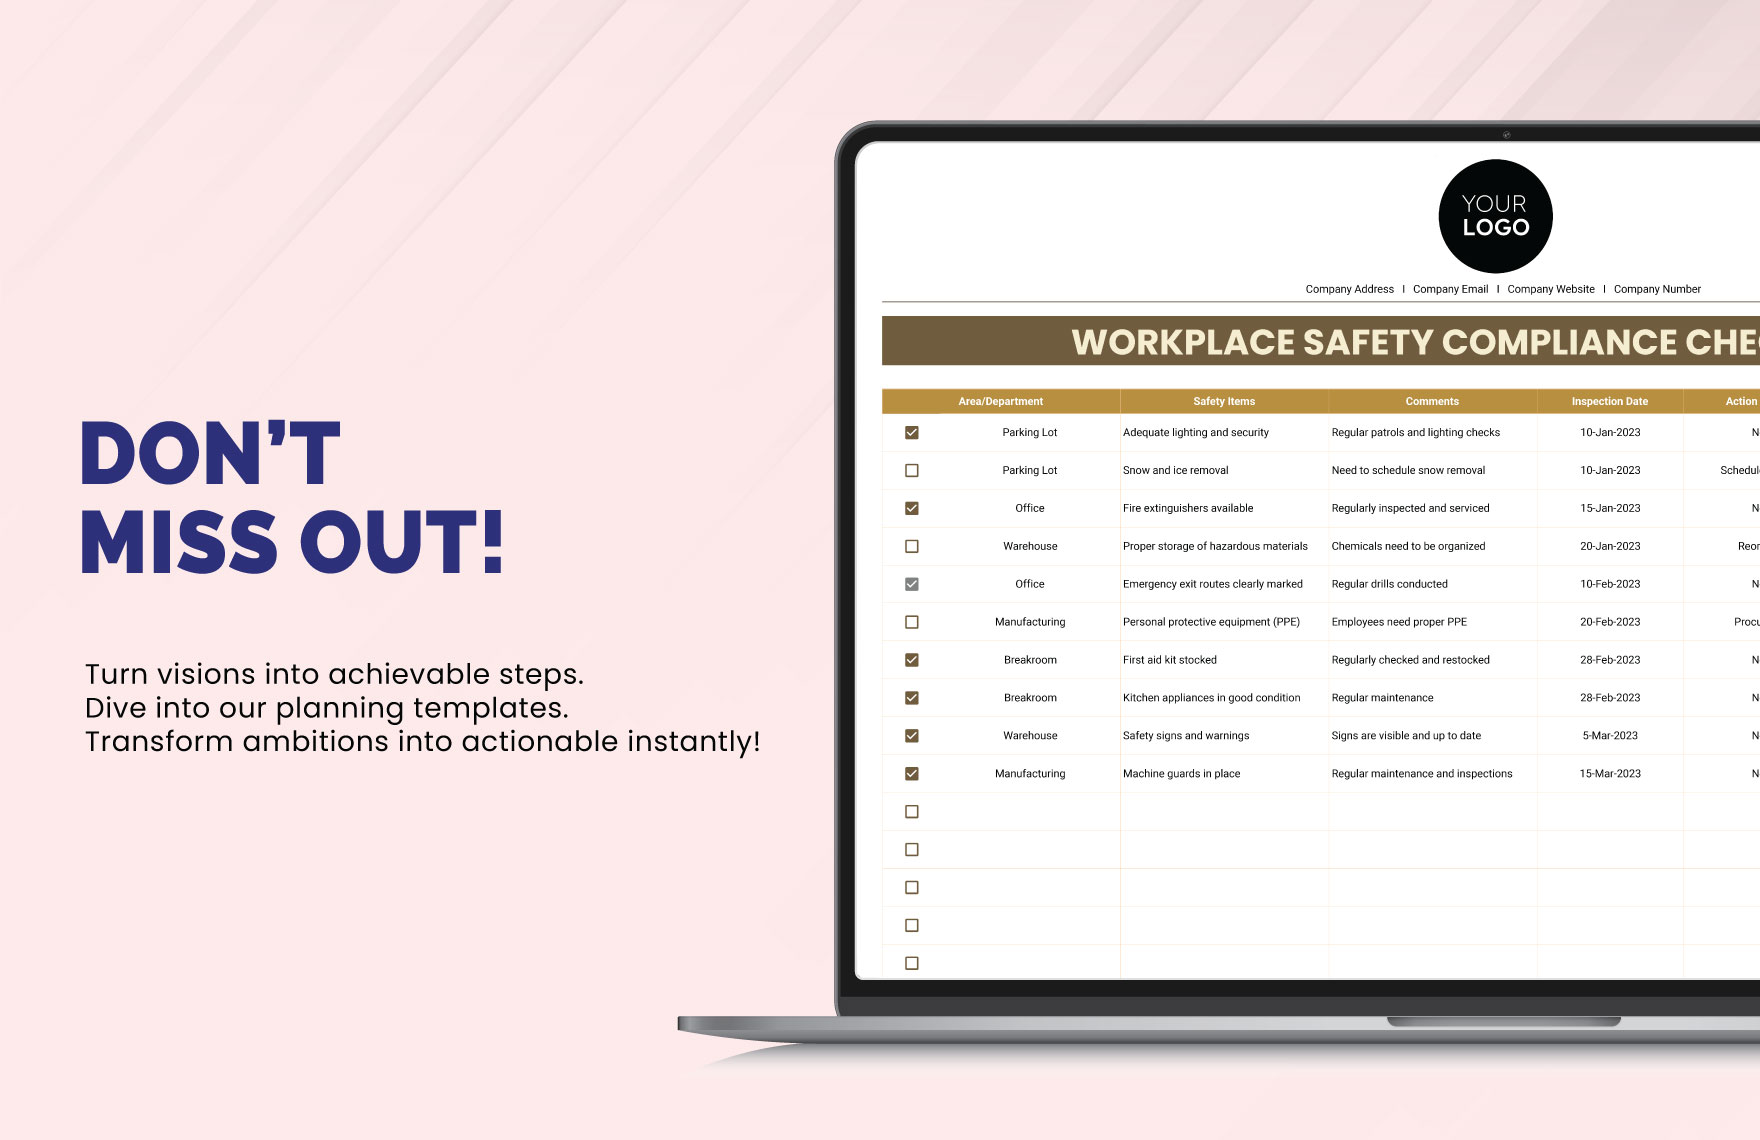 Workplace Safety Compliance Checklist HR Template